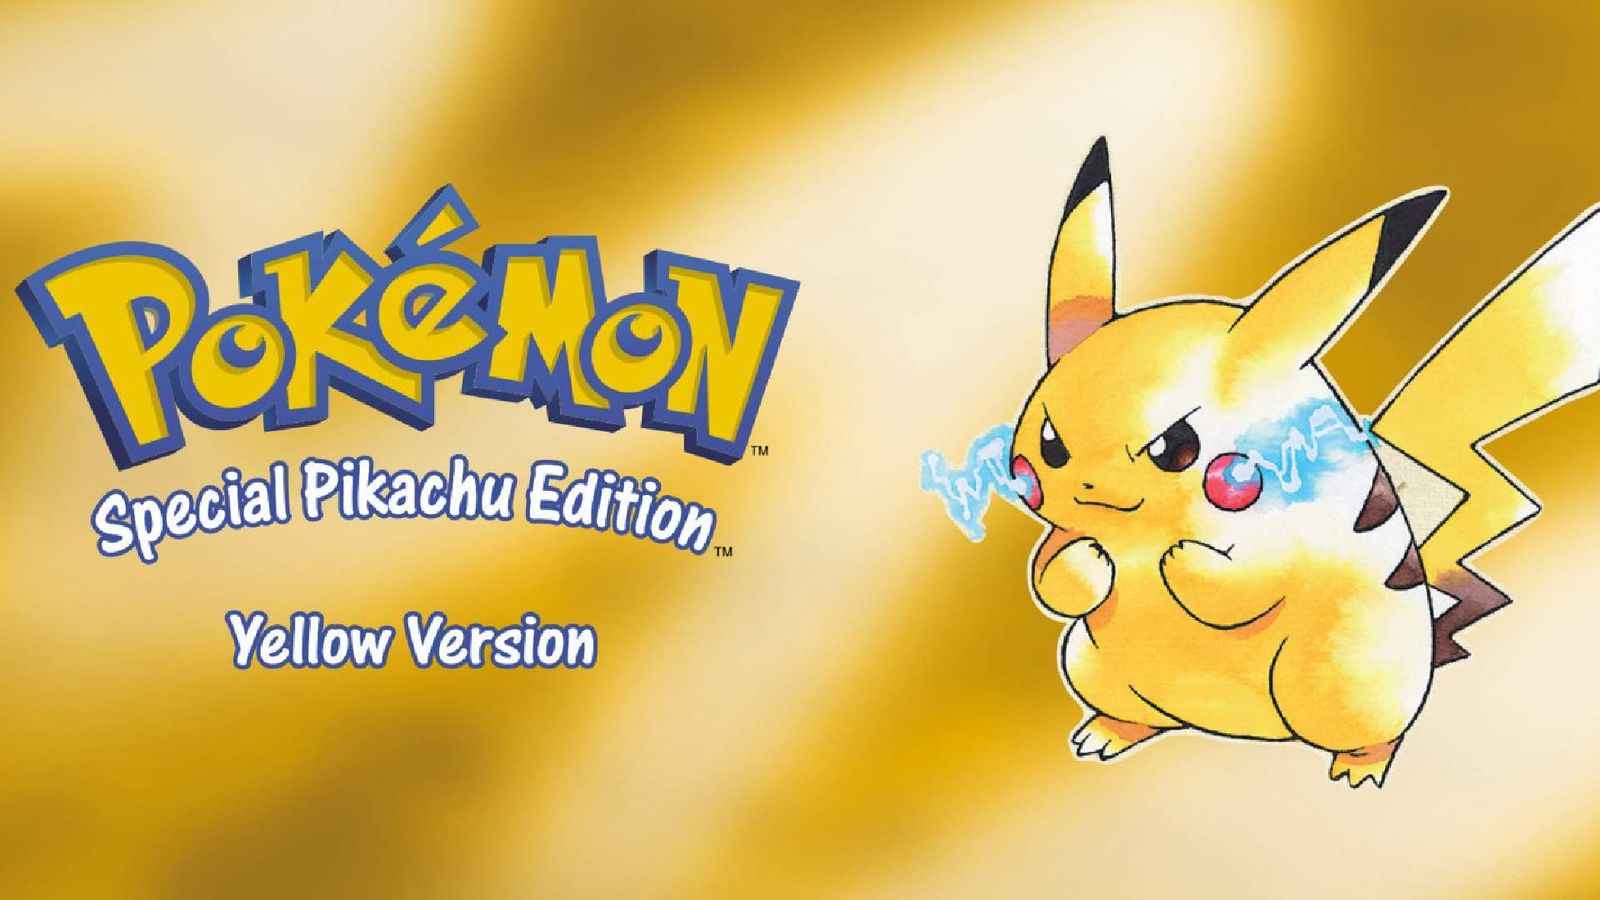 Pokémon Yellow logo and fat classic pikachu sprite 